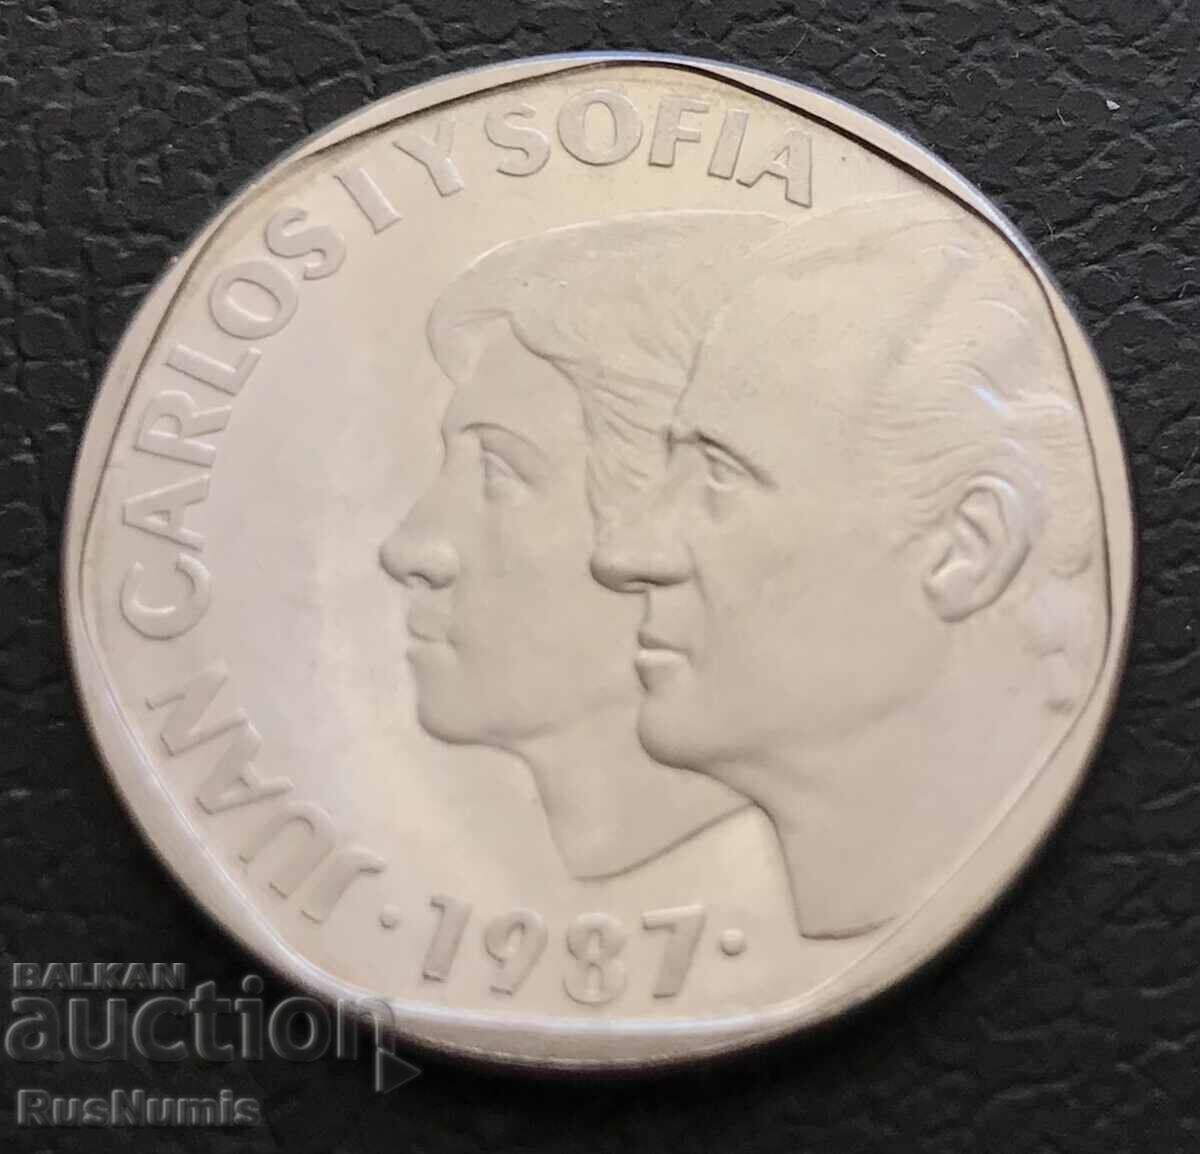 Spain. 500 pesetas 1987. Juan Carlos and Sofia. UNC.